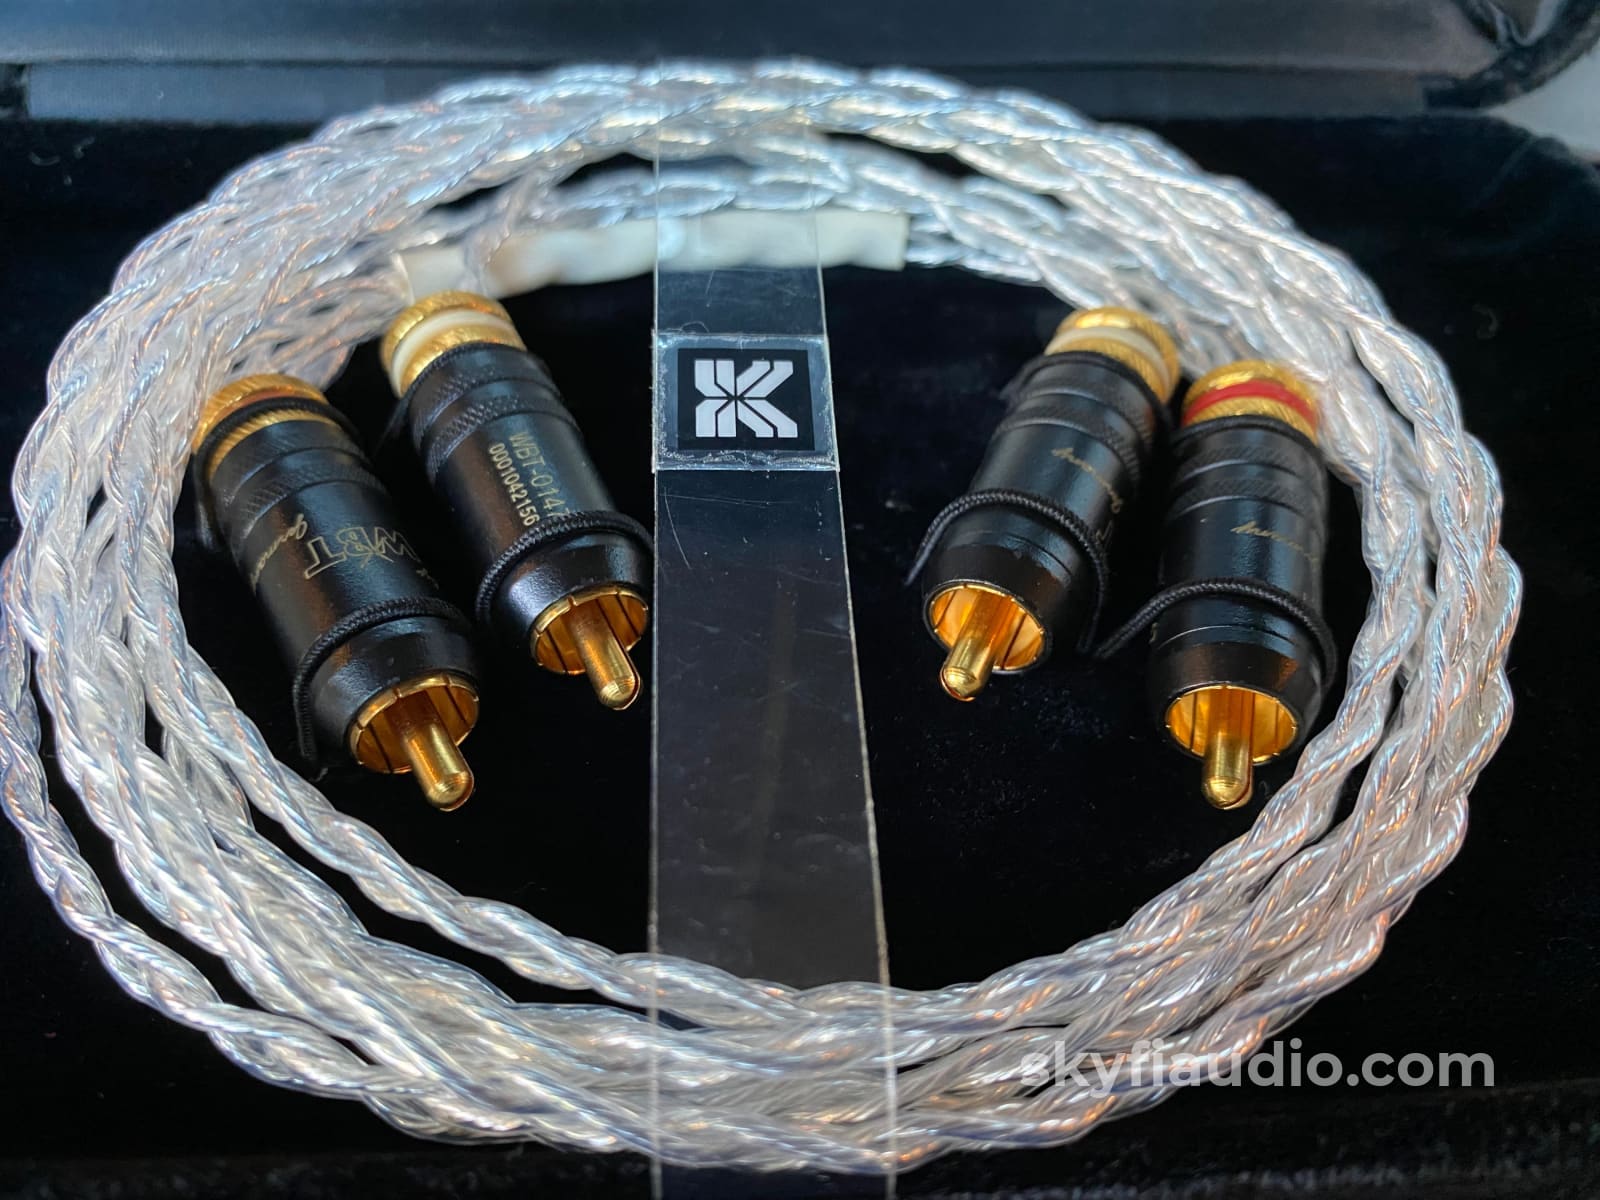 Kimber Kable Kcag Rca Interconnects With Wbt Connectors - 2 Meters Recftpkbzc4Fmdjzk